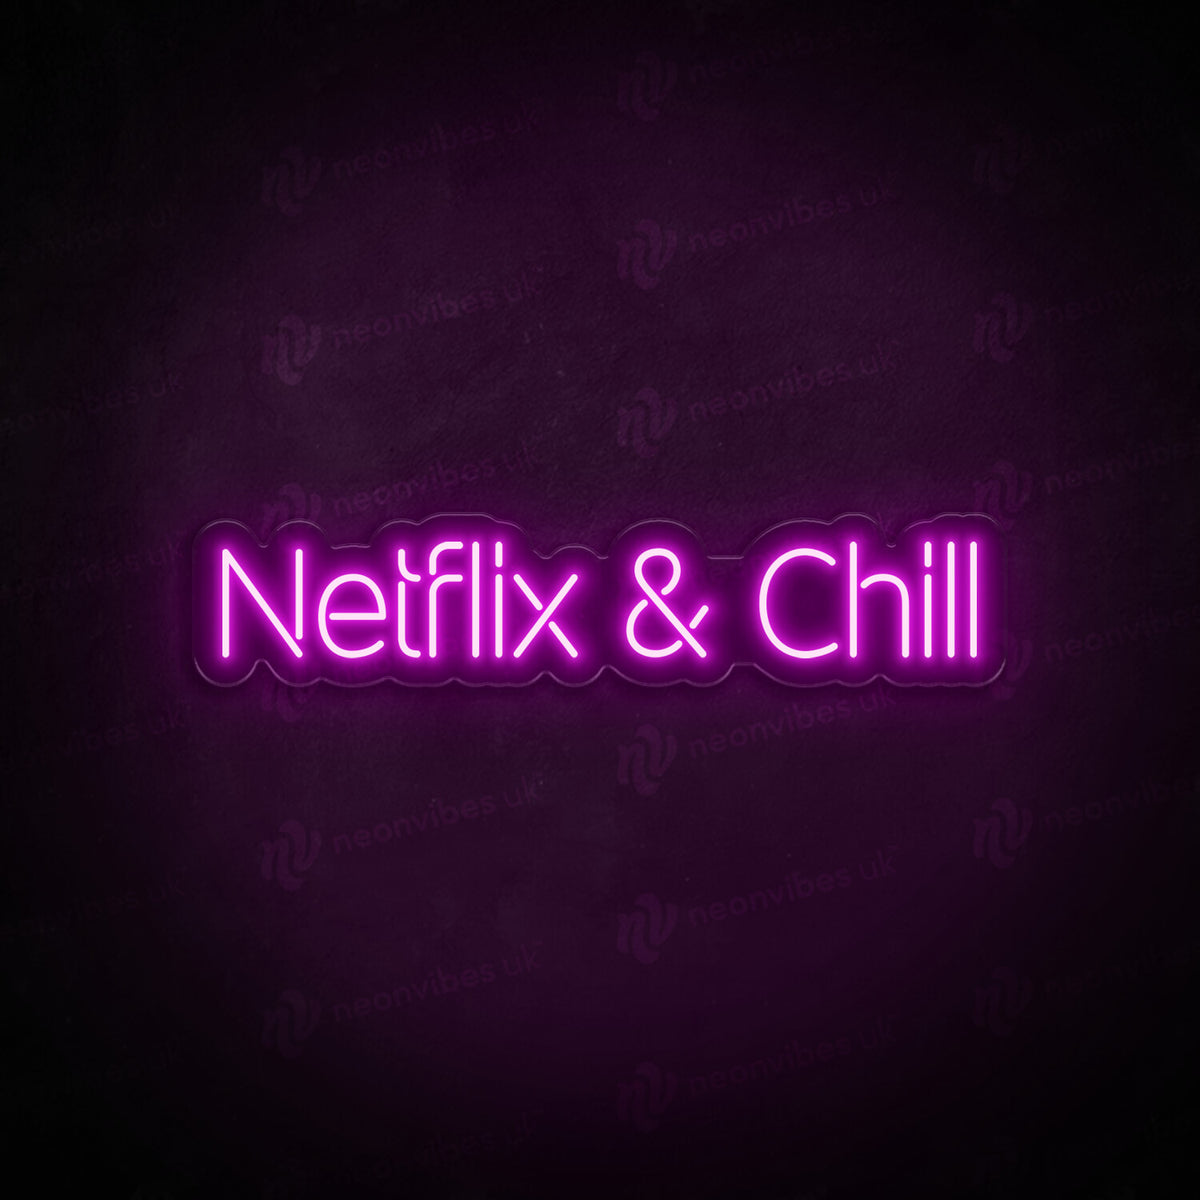 Netflix &amp; Chill neon sign